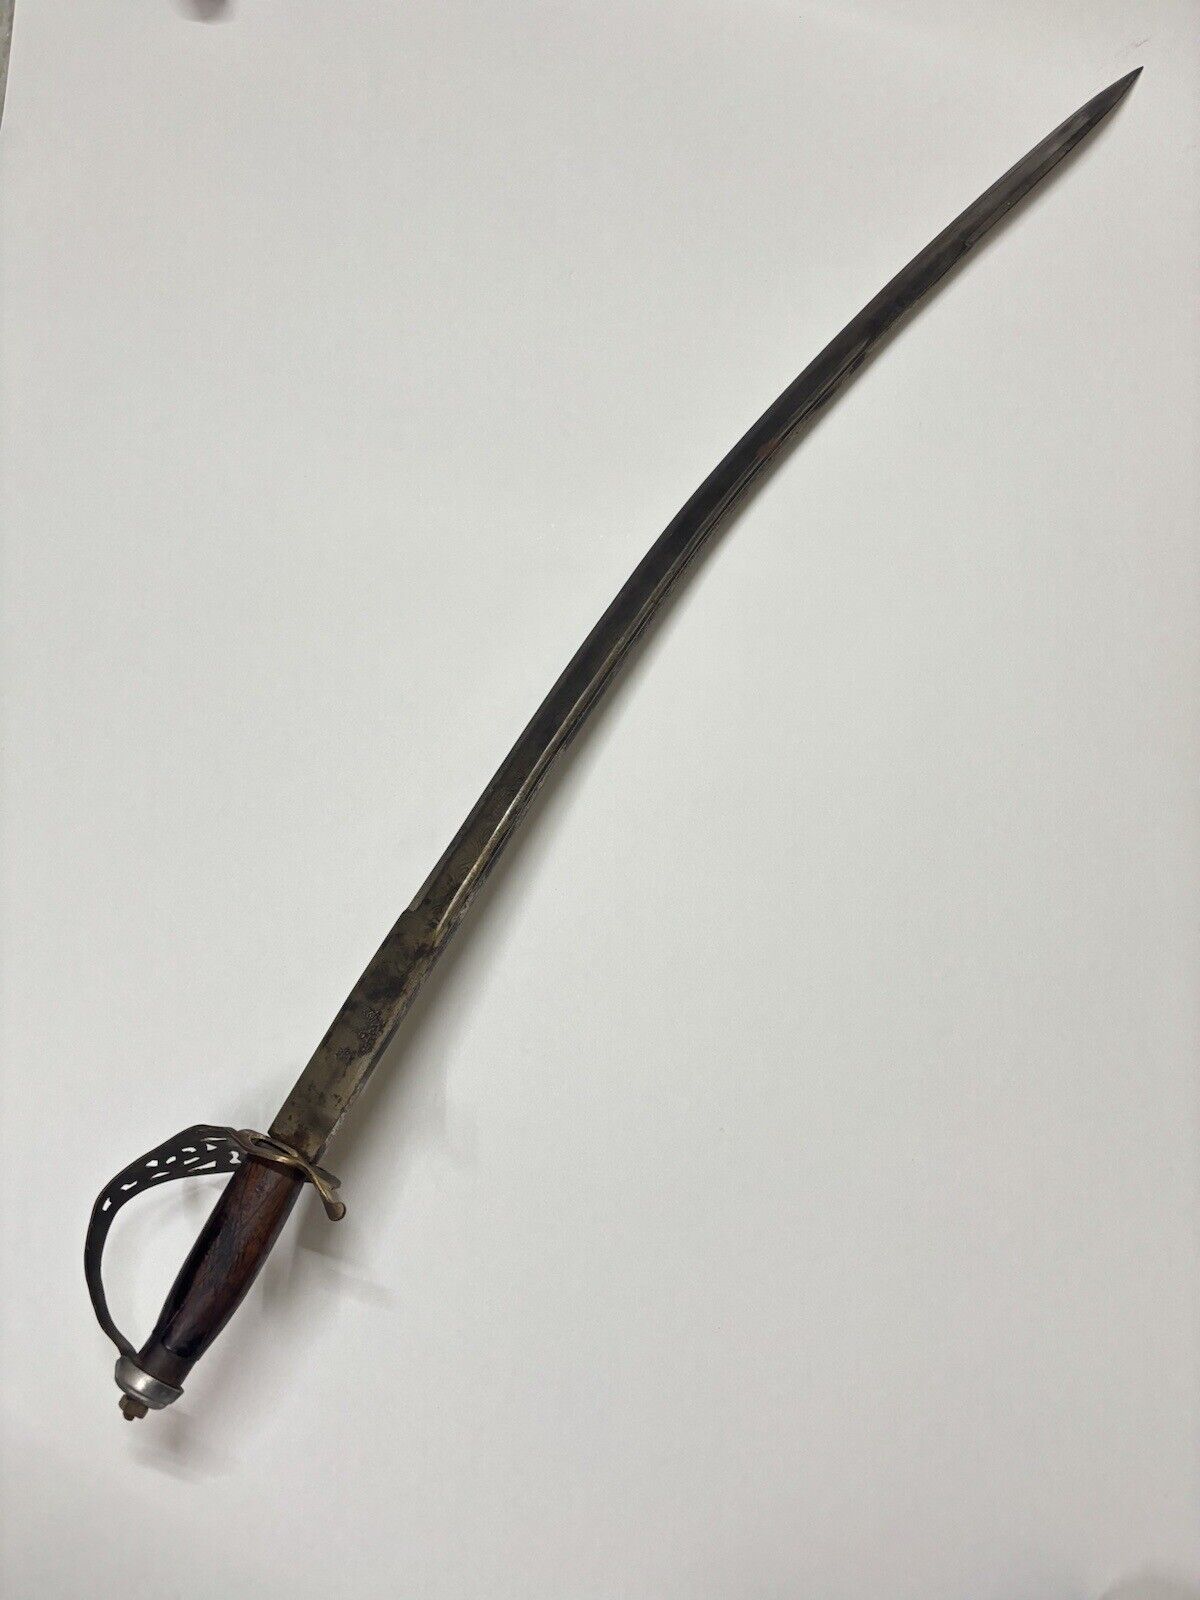 Saber Sword Antique Vintage Us Civil War Old Rare Collectible 36\'